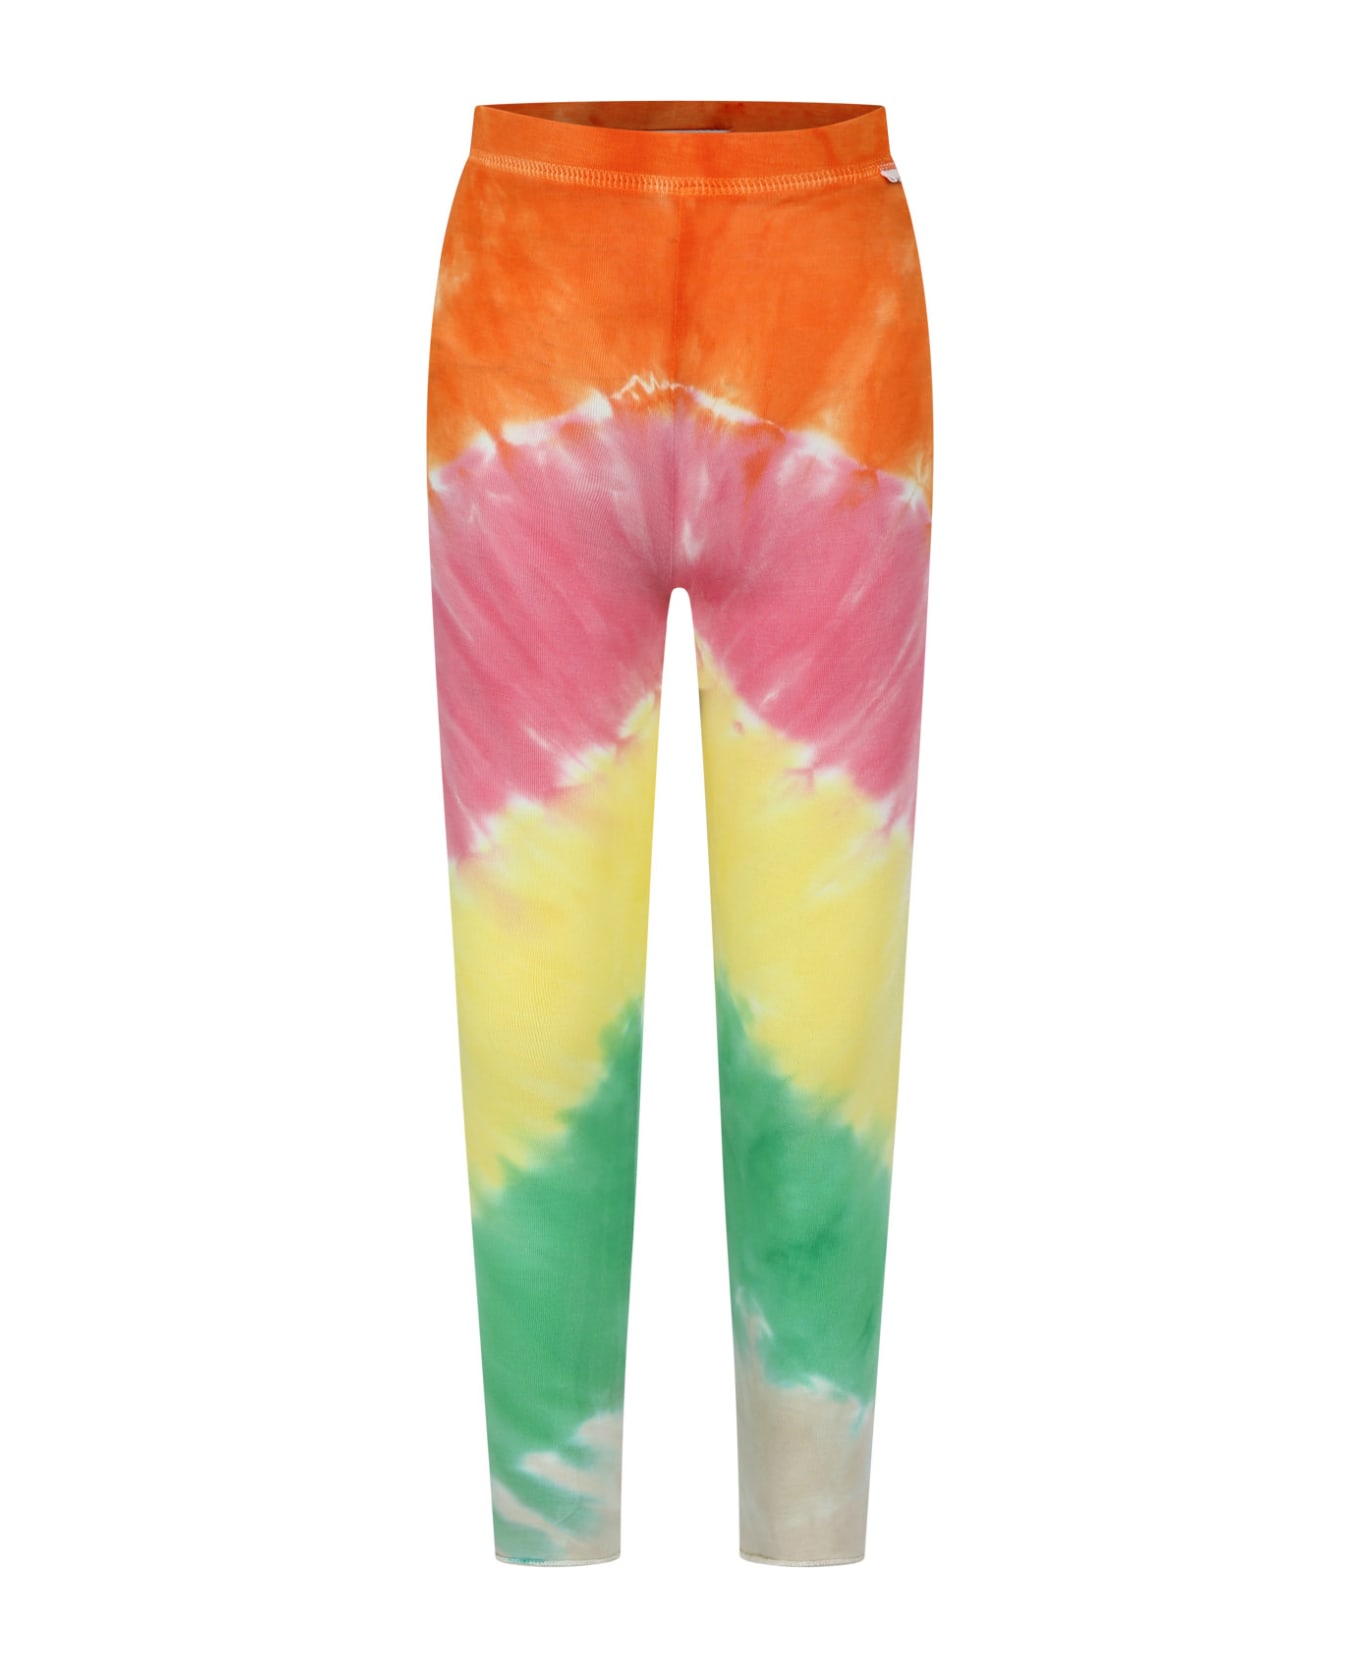 Molo Orange Leggings For Girl With Tie-dye Print - Multicolor ボトムス